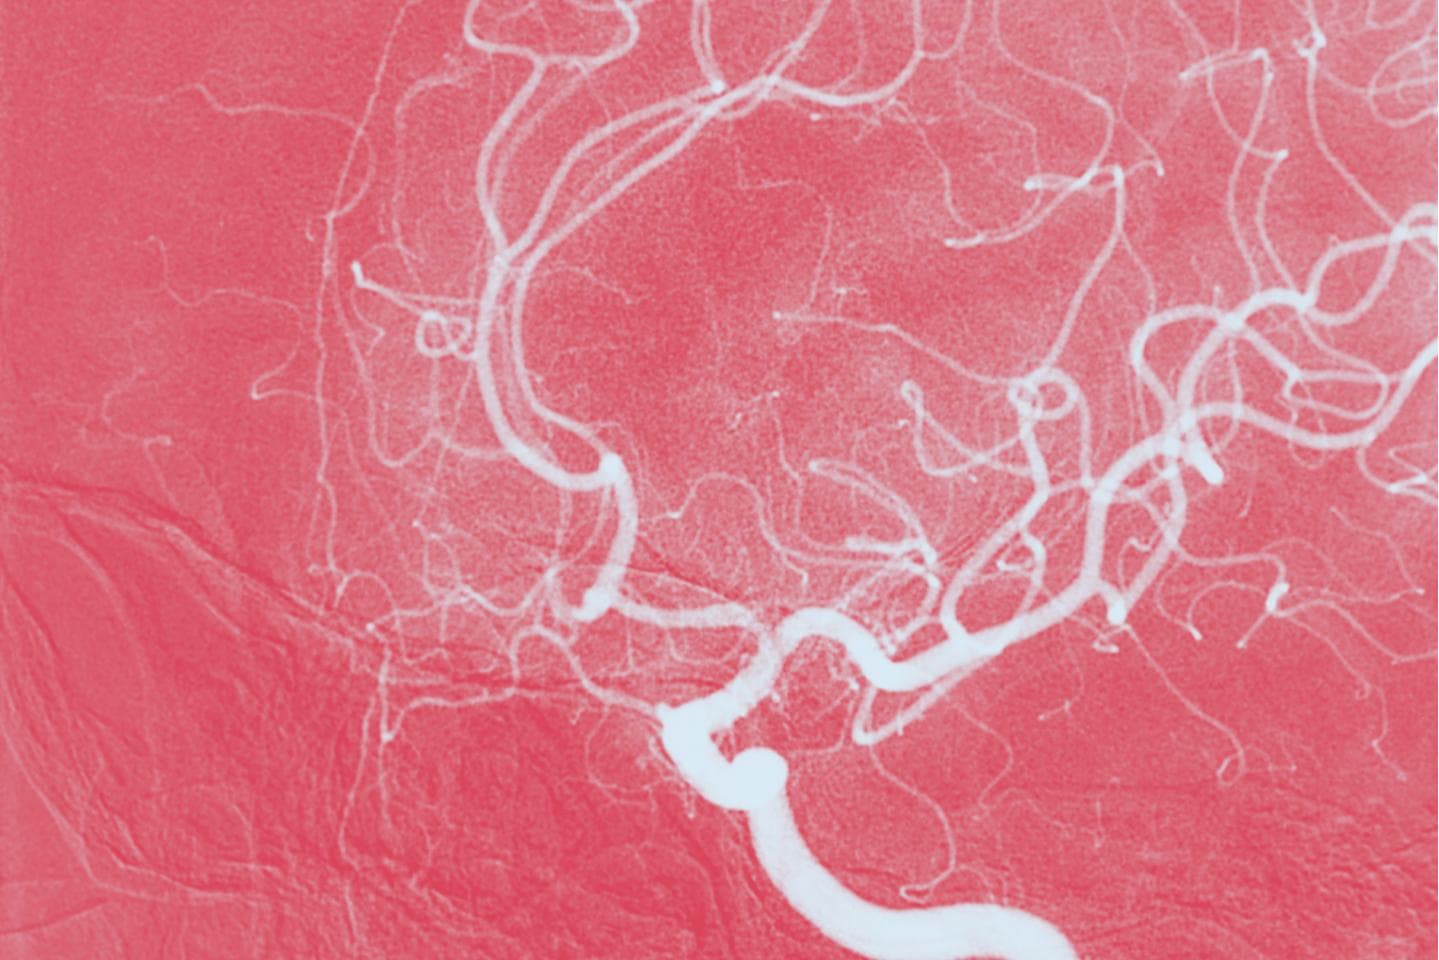 Internal carotid artery DSA image